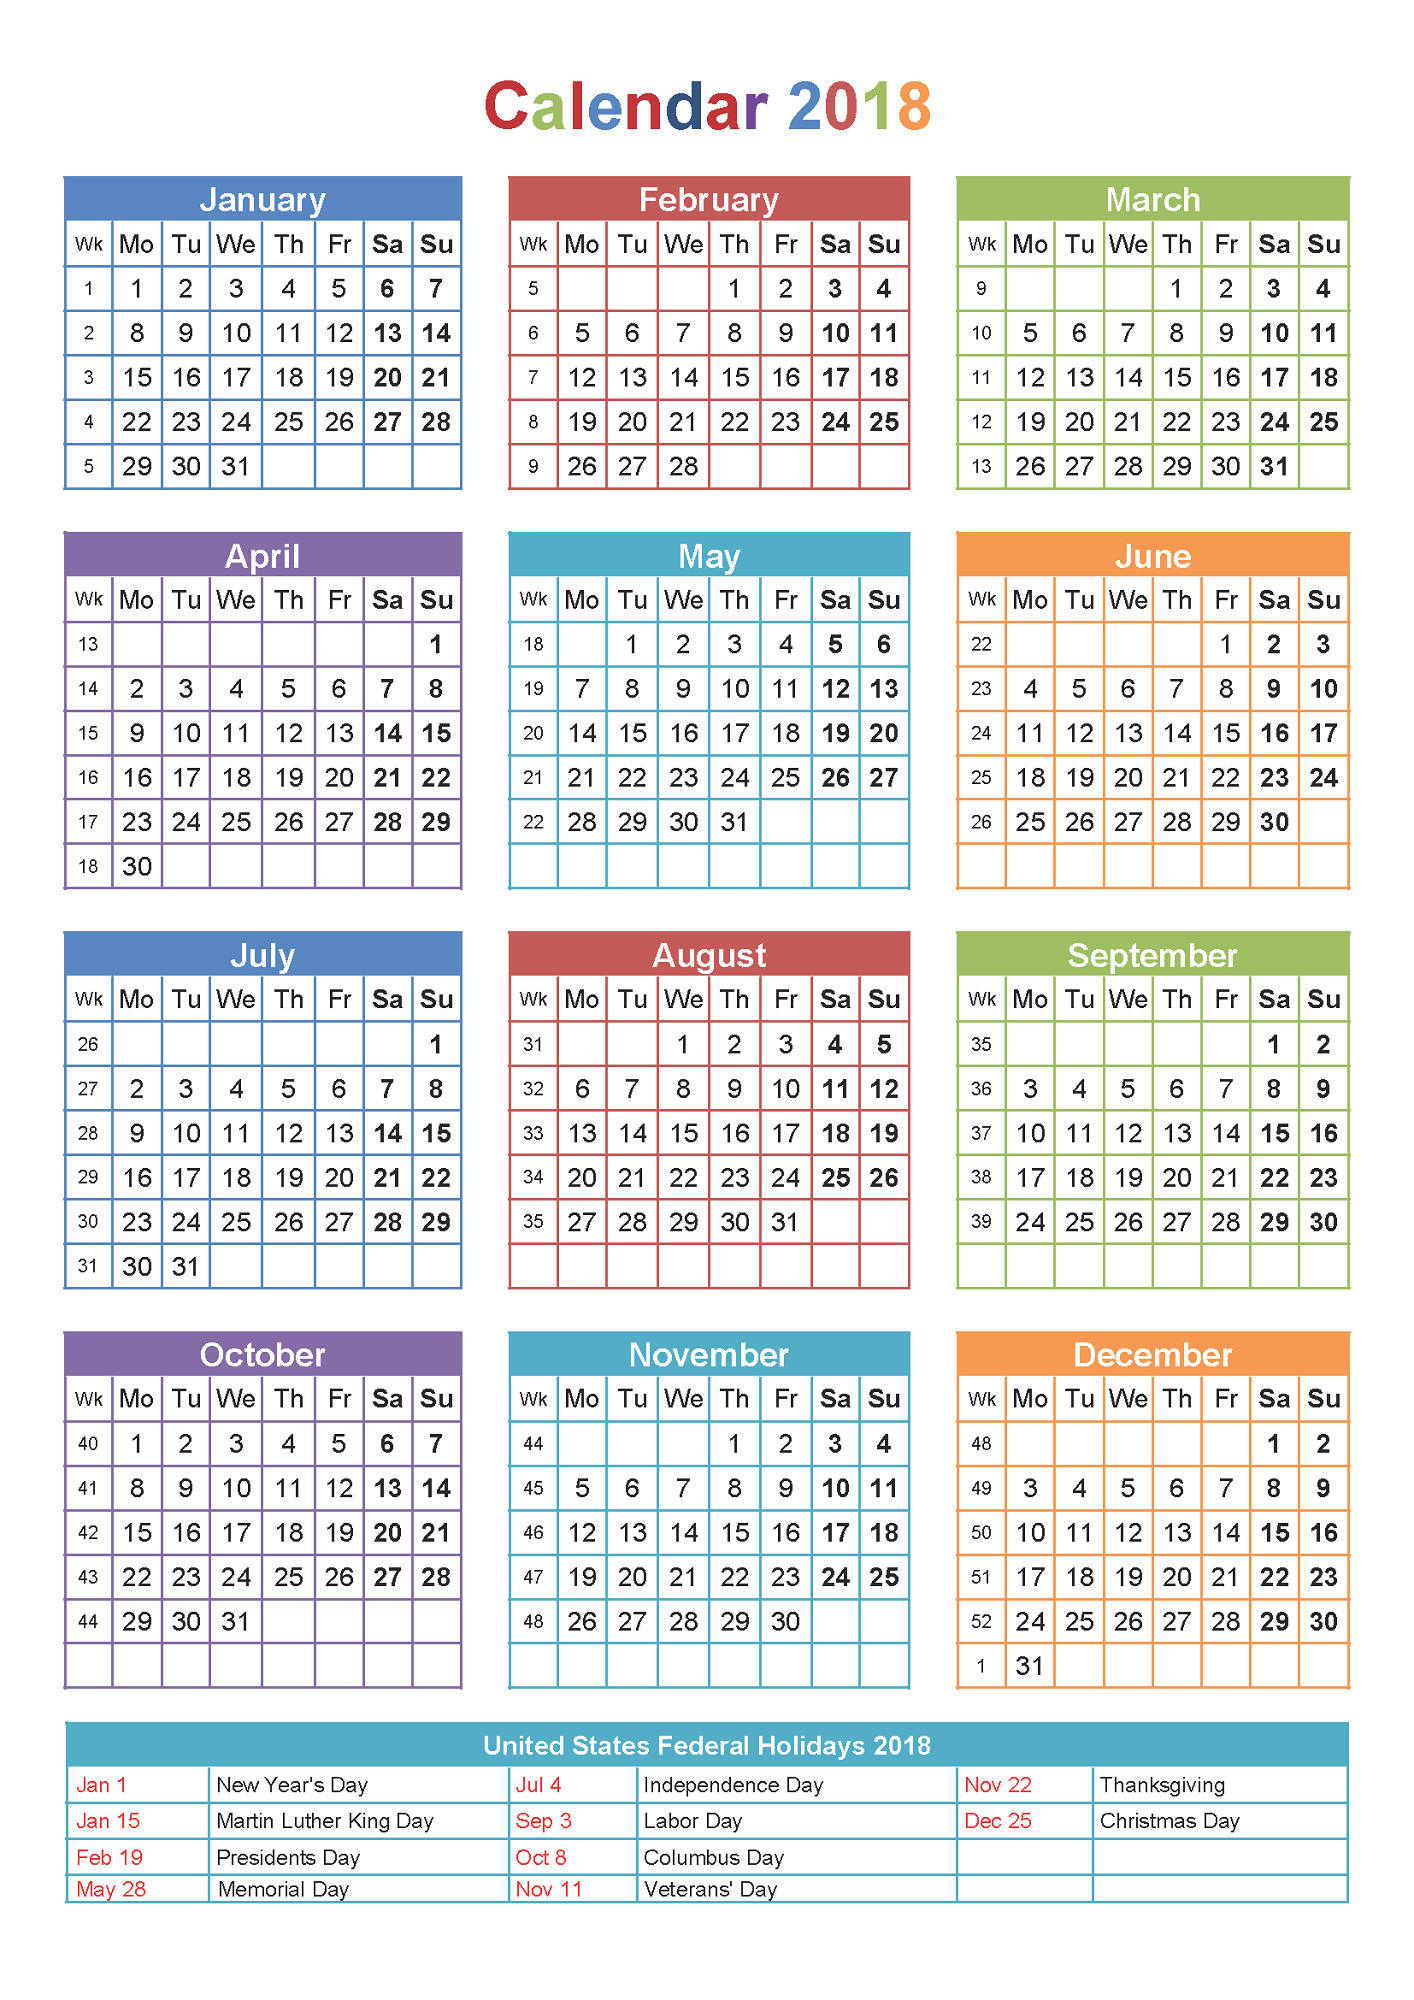 Desktop Wallpapers Calendar March 2018 44 images 1414x2000